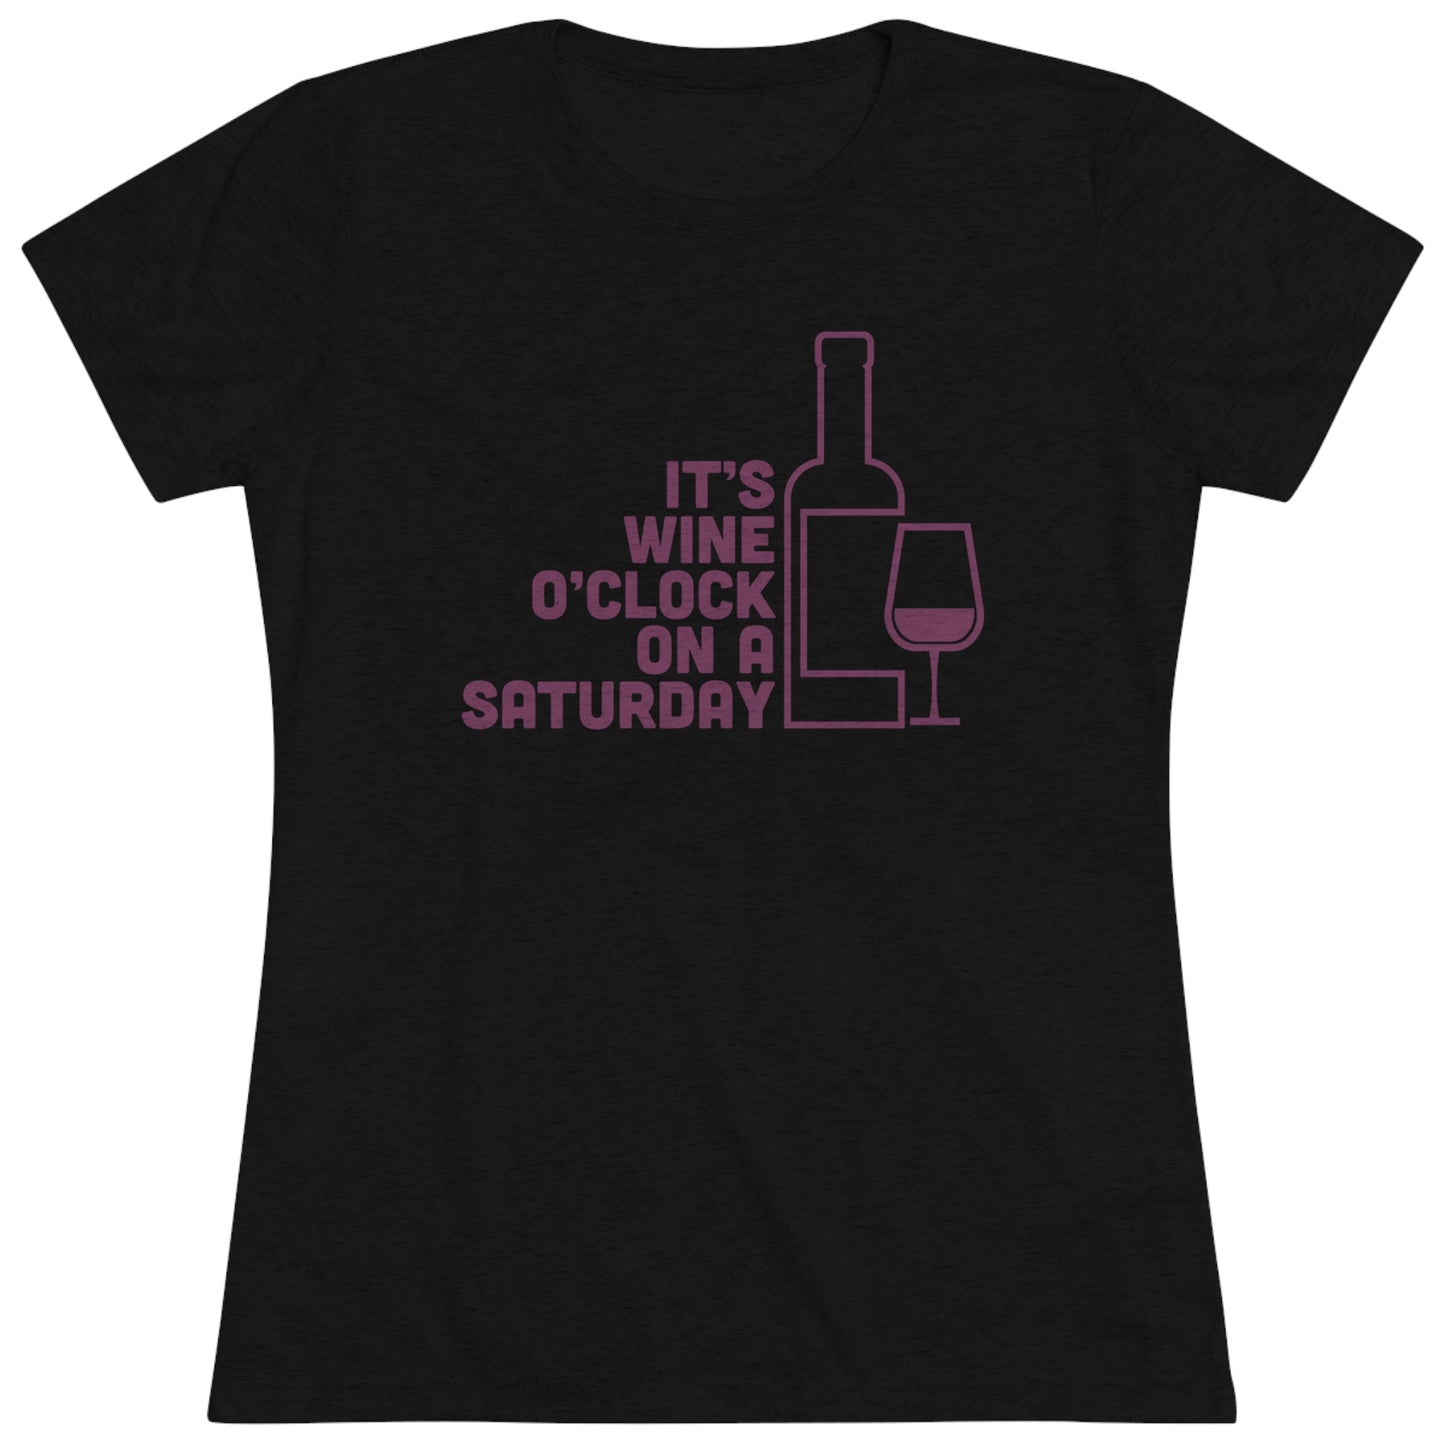 It's Wine O'Clock on a Saturday - Women's Triblend Tee